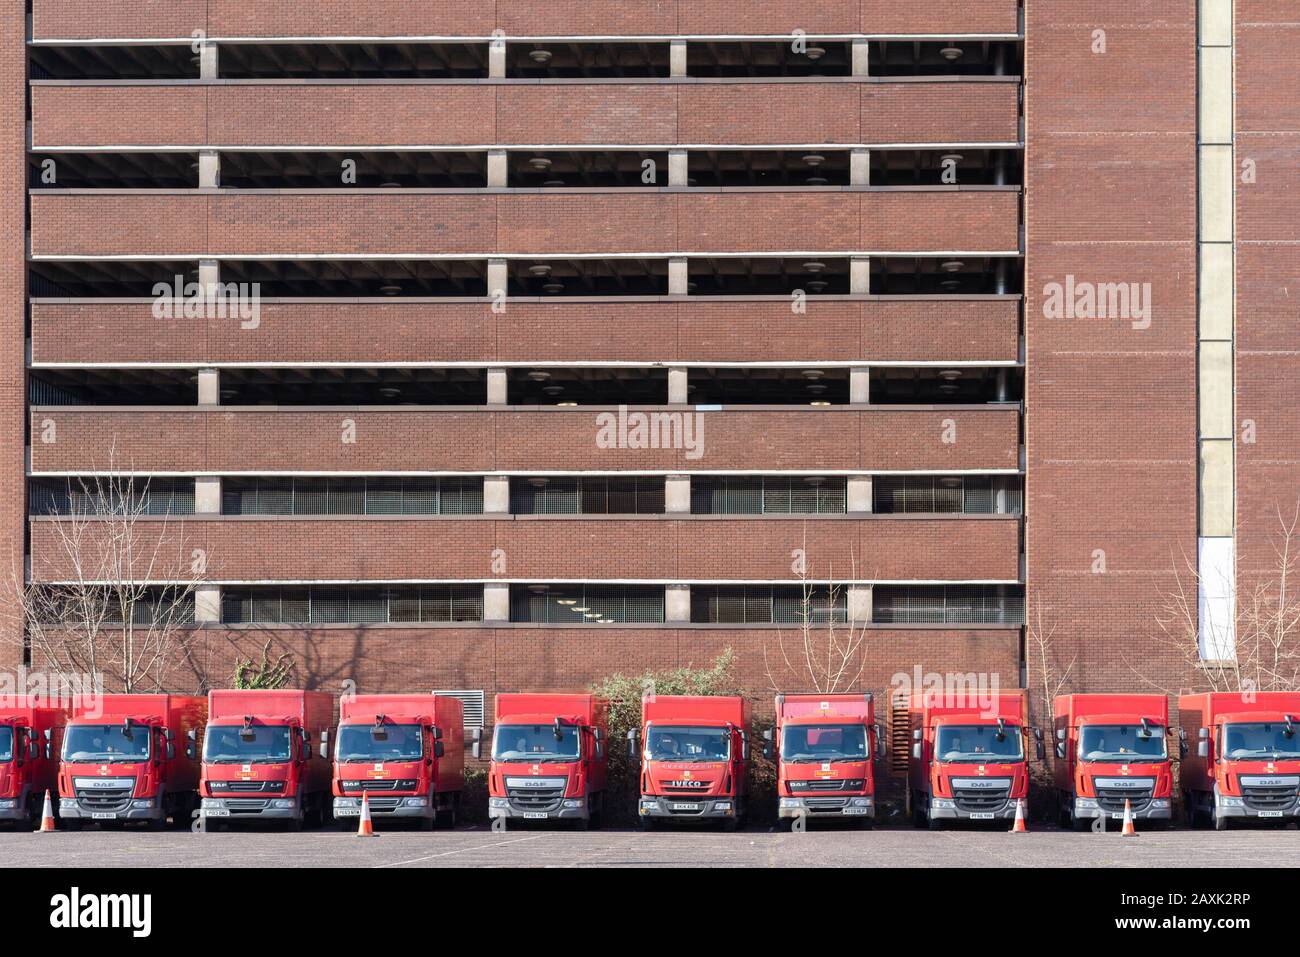 Rangée de camions DAF Royal Mail. Ipswich, East Anglia, Royaume-Uni Banque D'Images